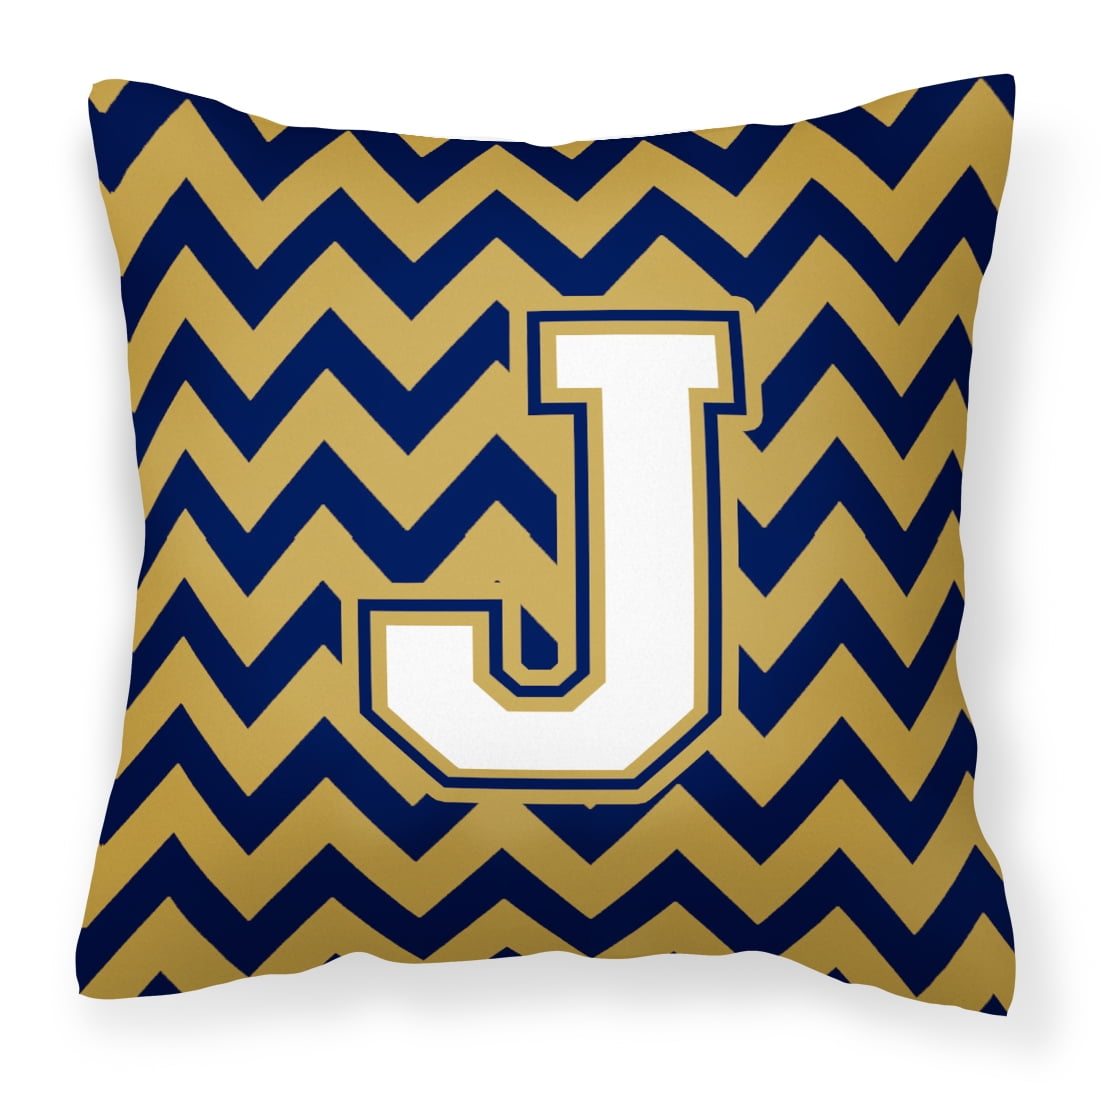 Letter J Chevron Navy Blue and Gold Fabric Decorative Pillow - Walmart.com